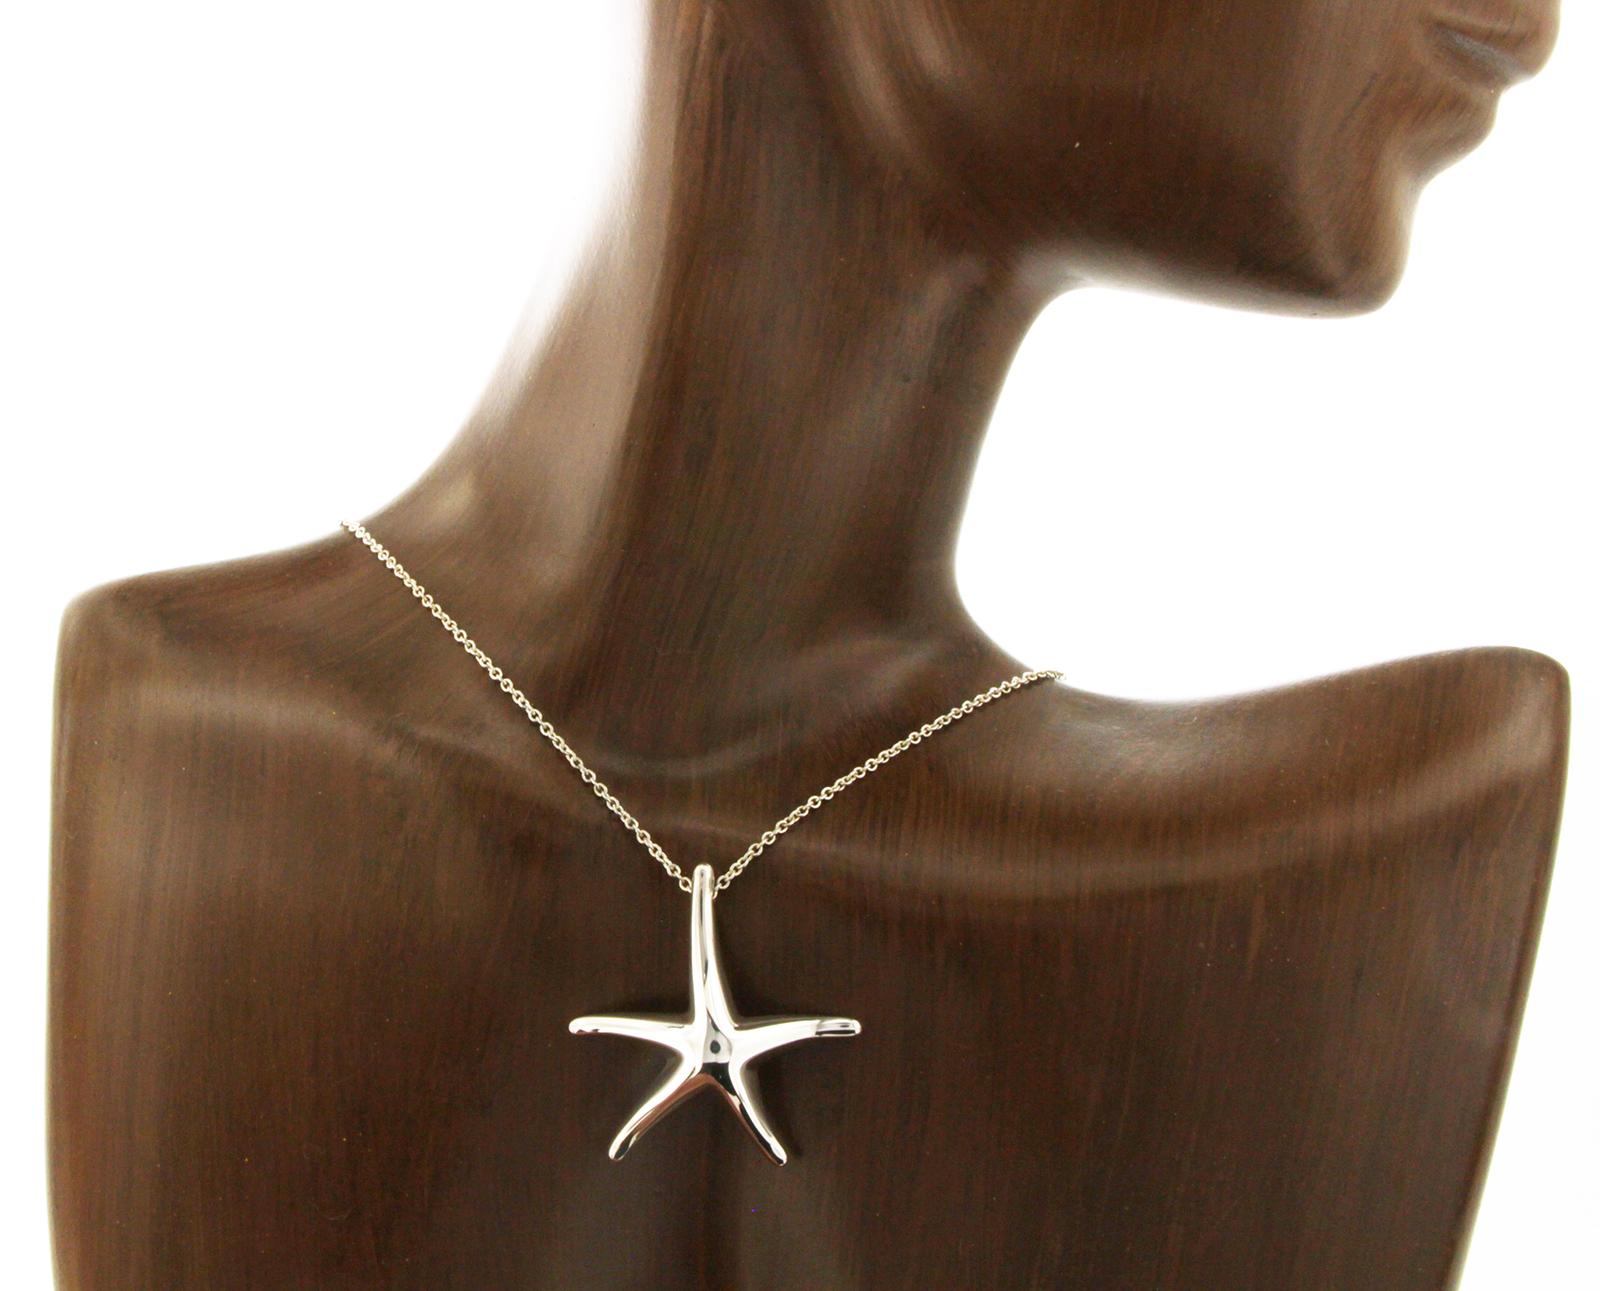 tiffany's starfish necklace